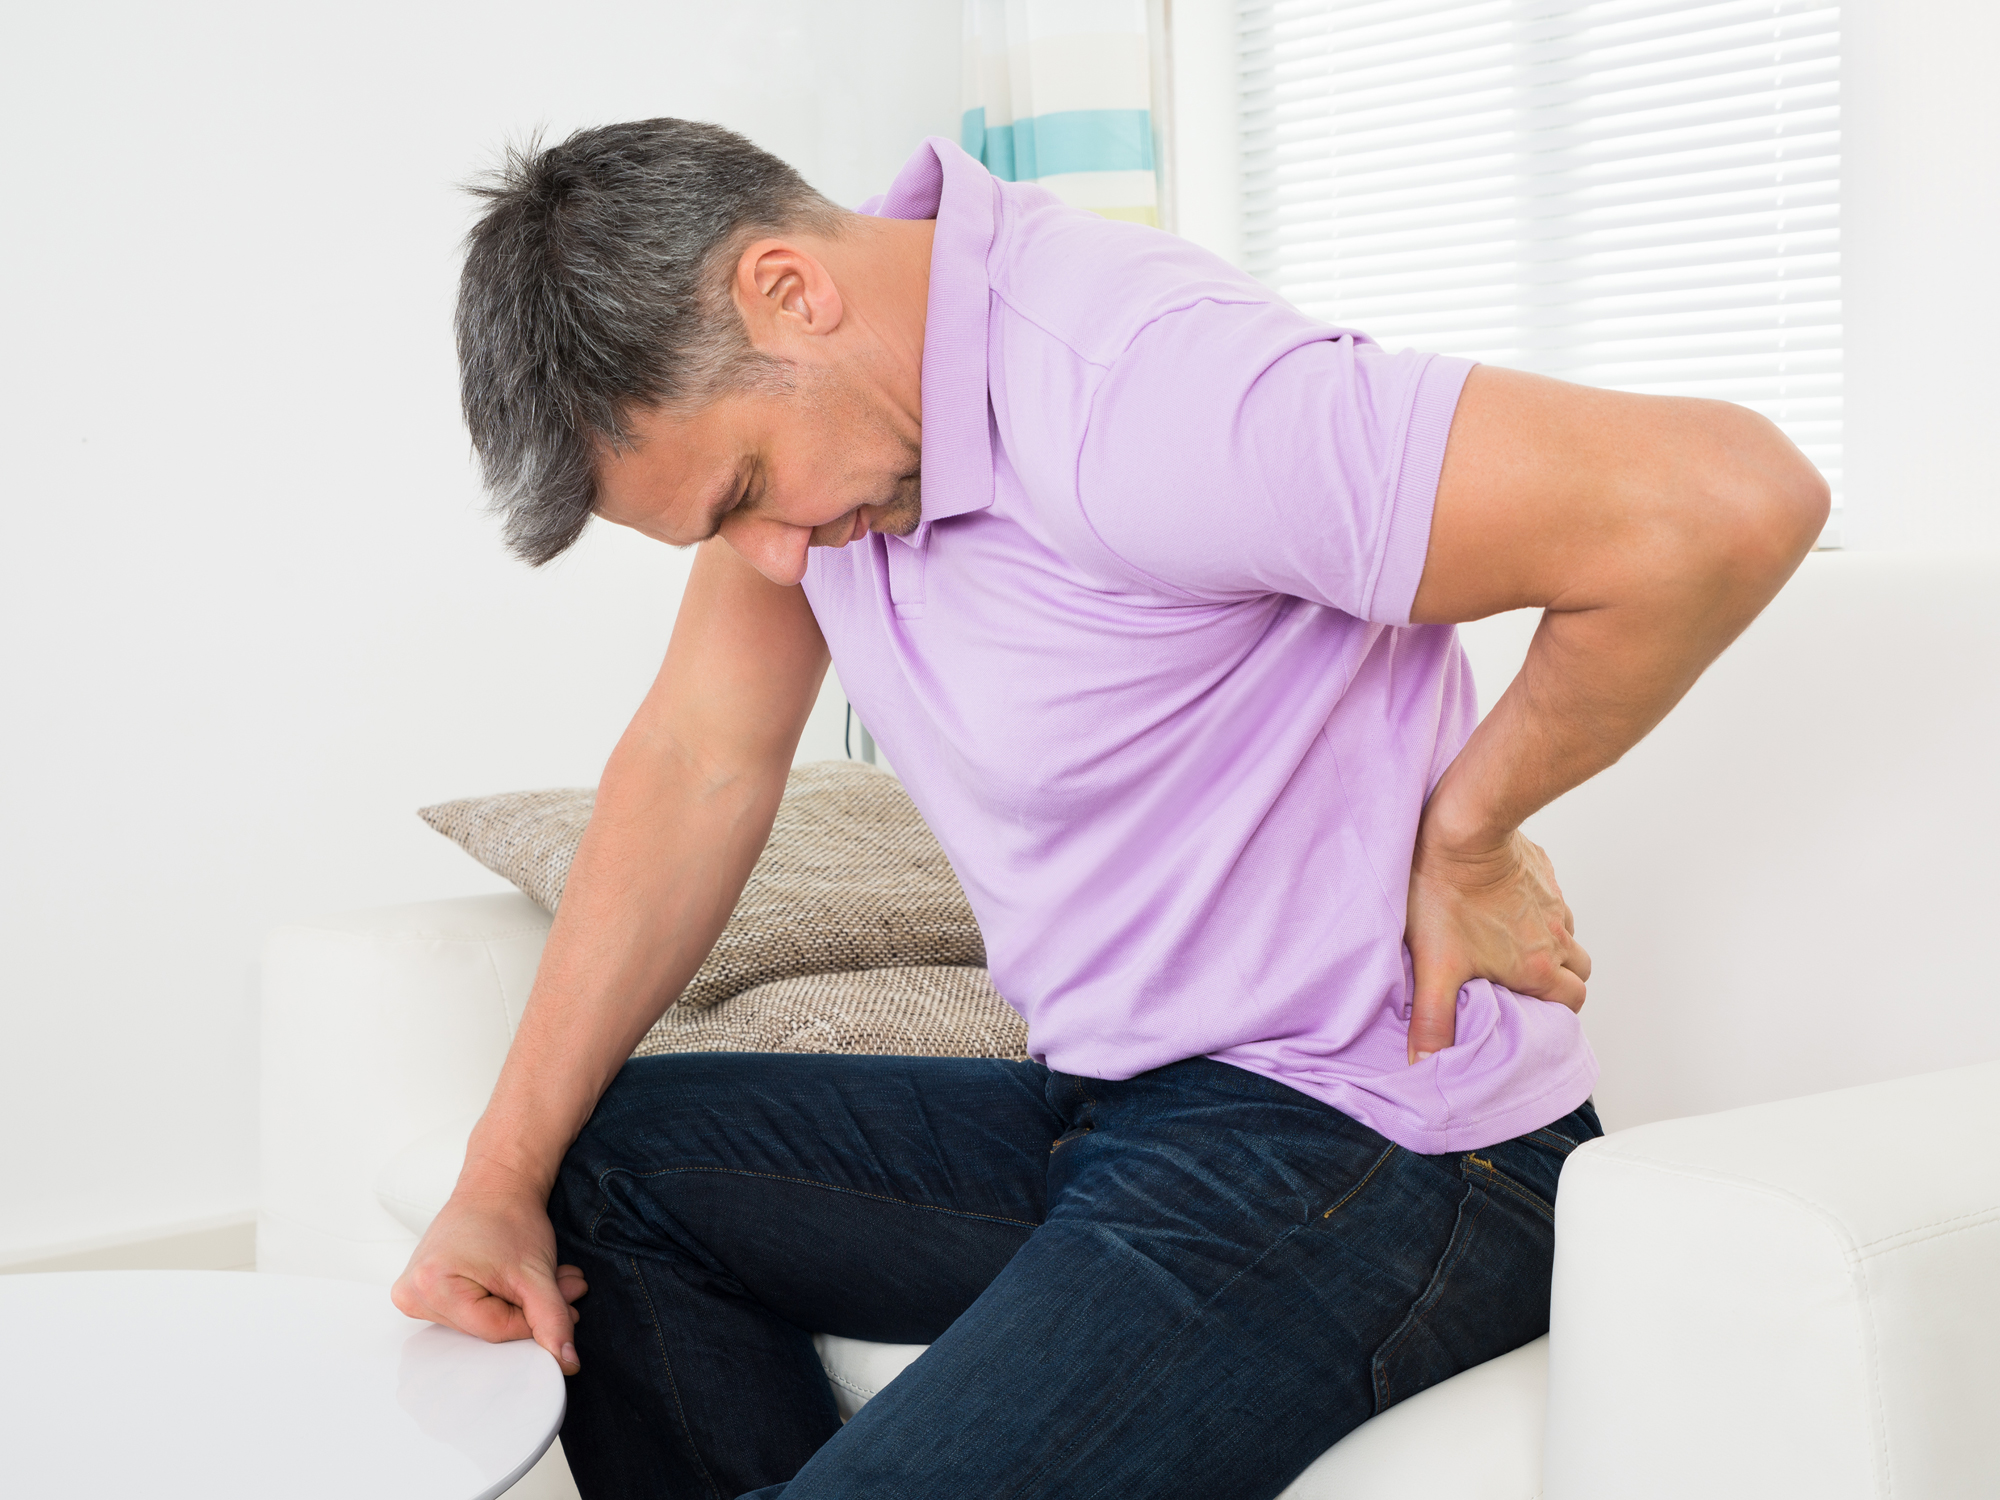 The secret to safe, effective, non-addictive back pain relief